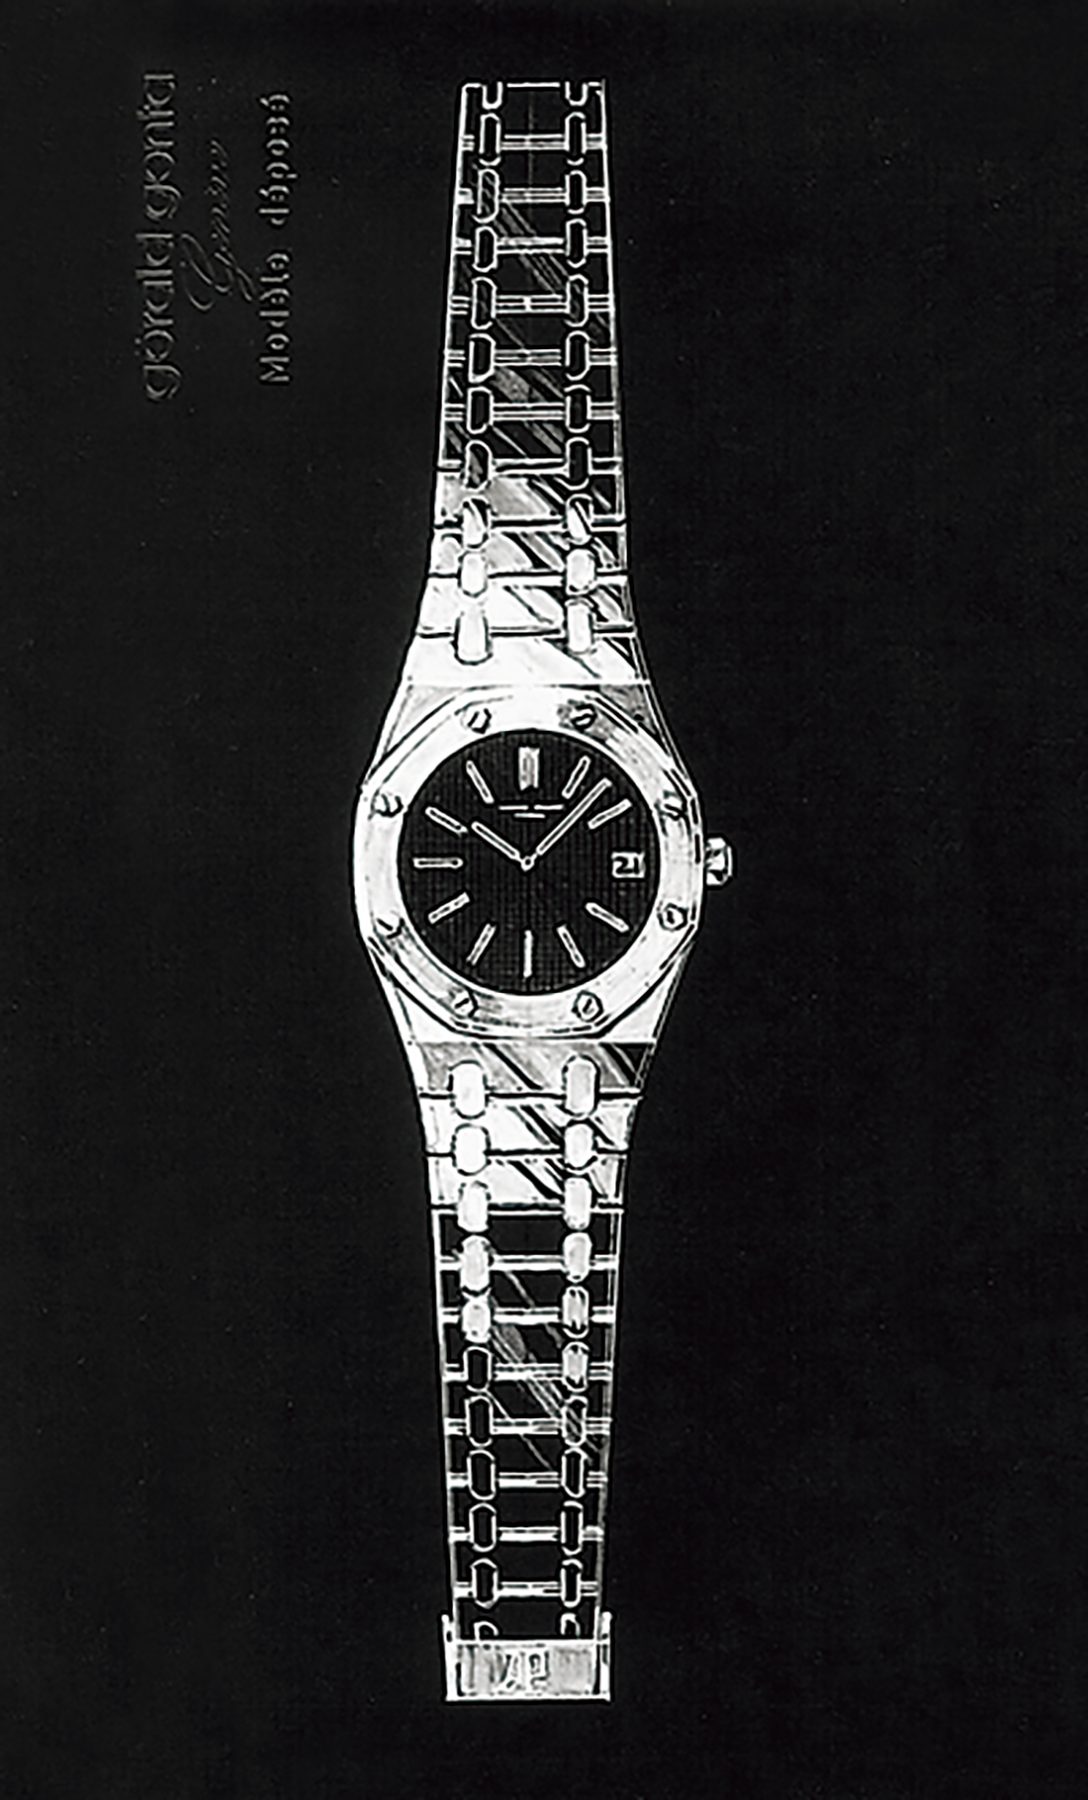 Theme 1. Vintage Watch